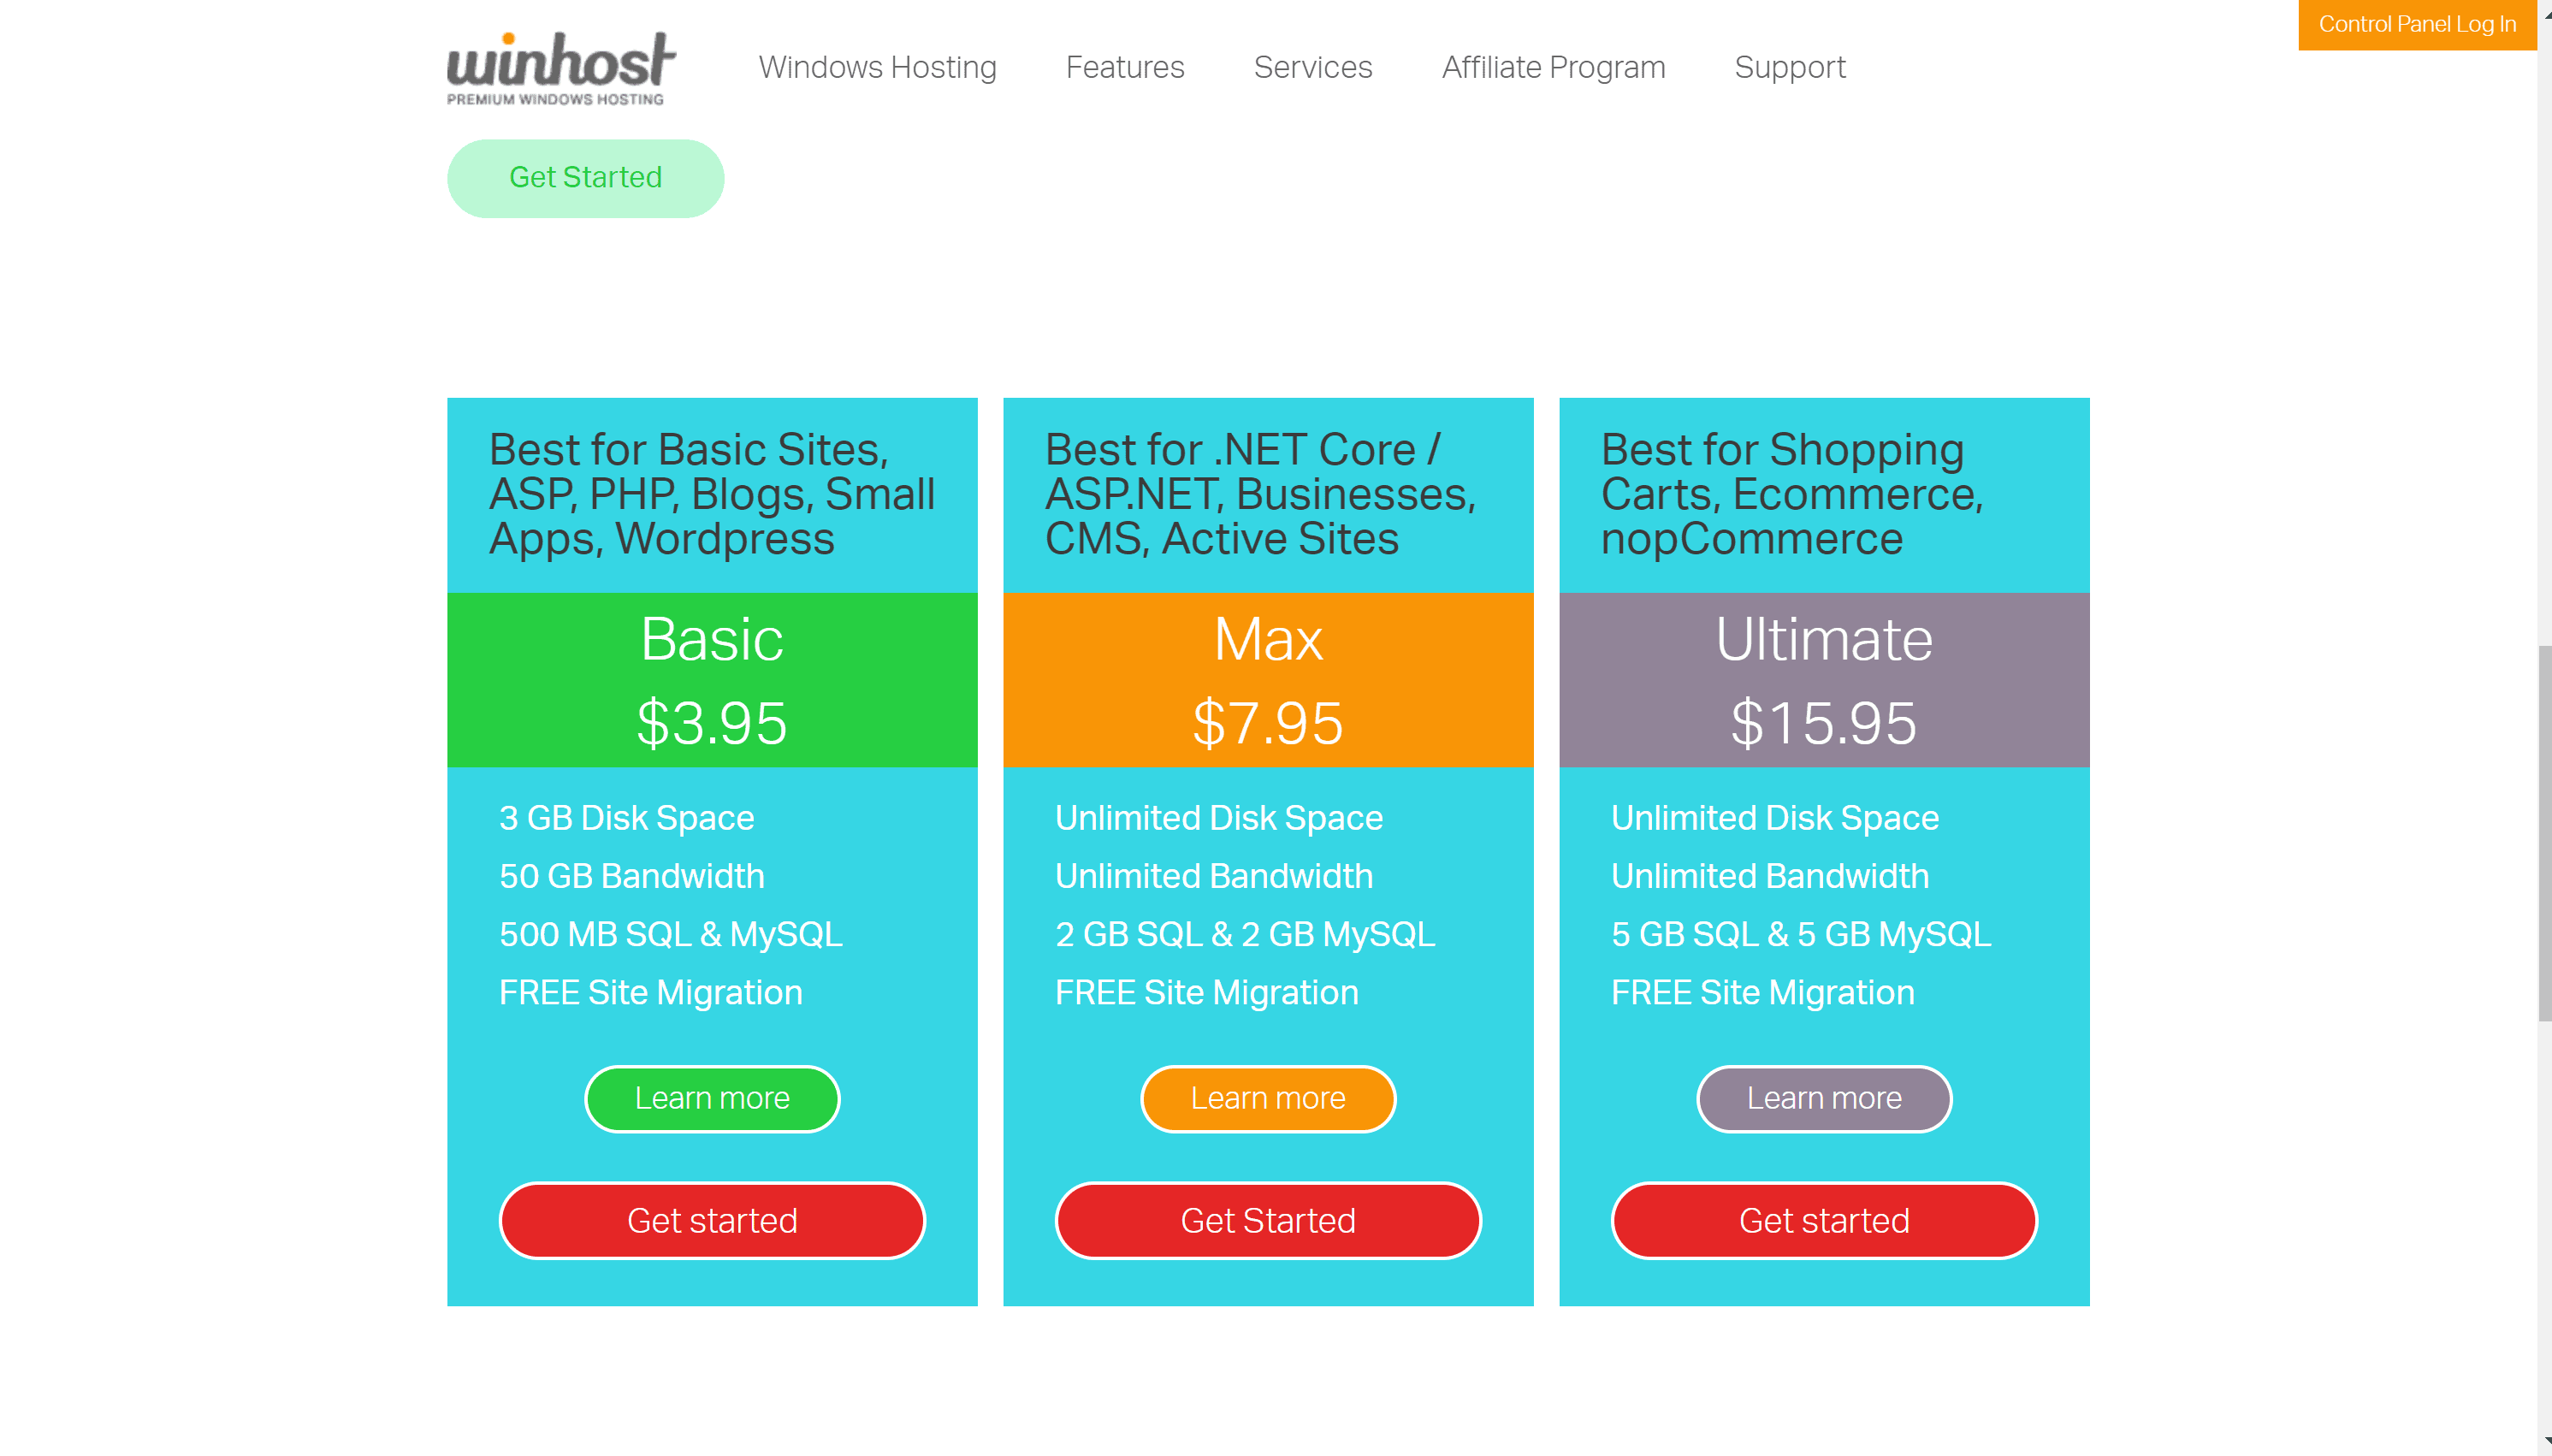 WinHost coupon codes - basic plan on $ 3.95